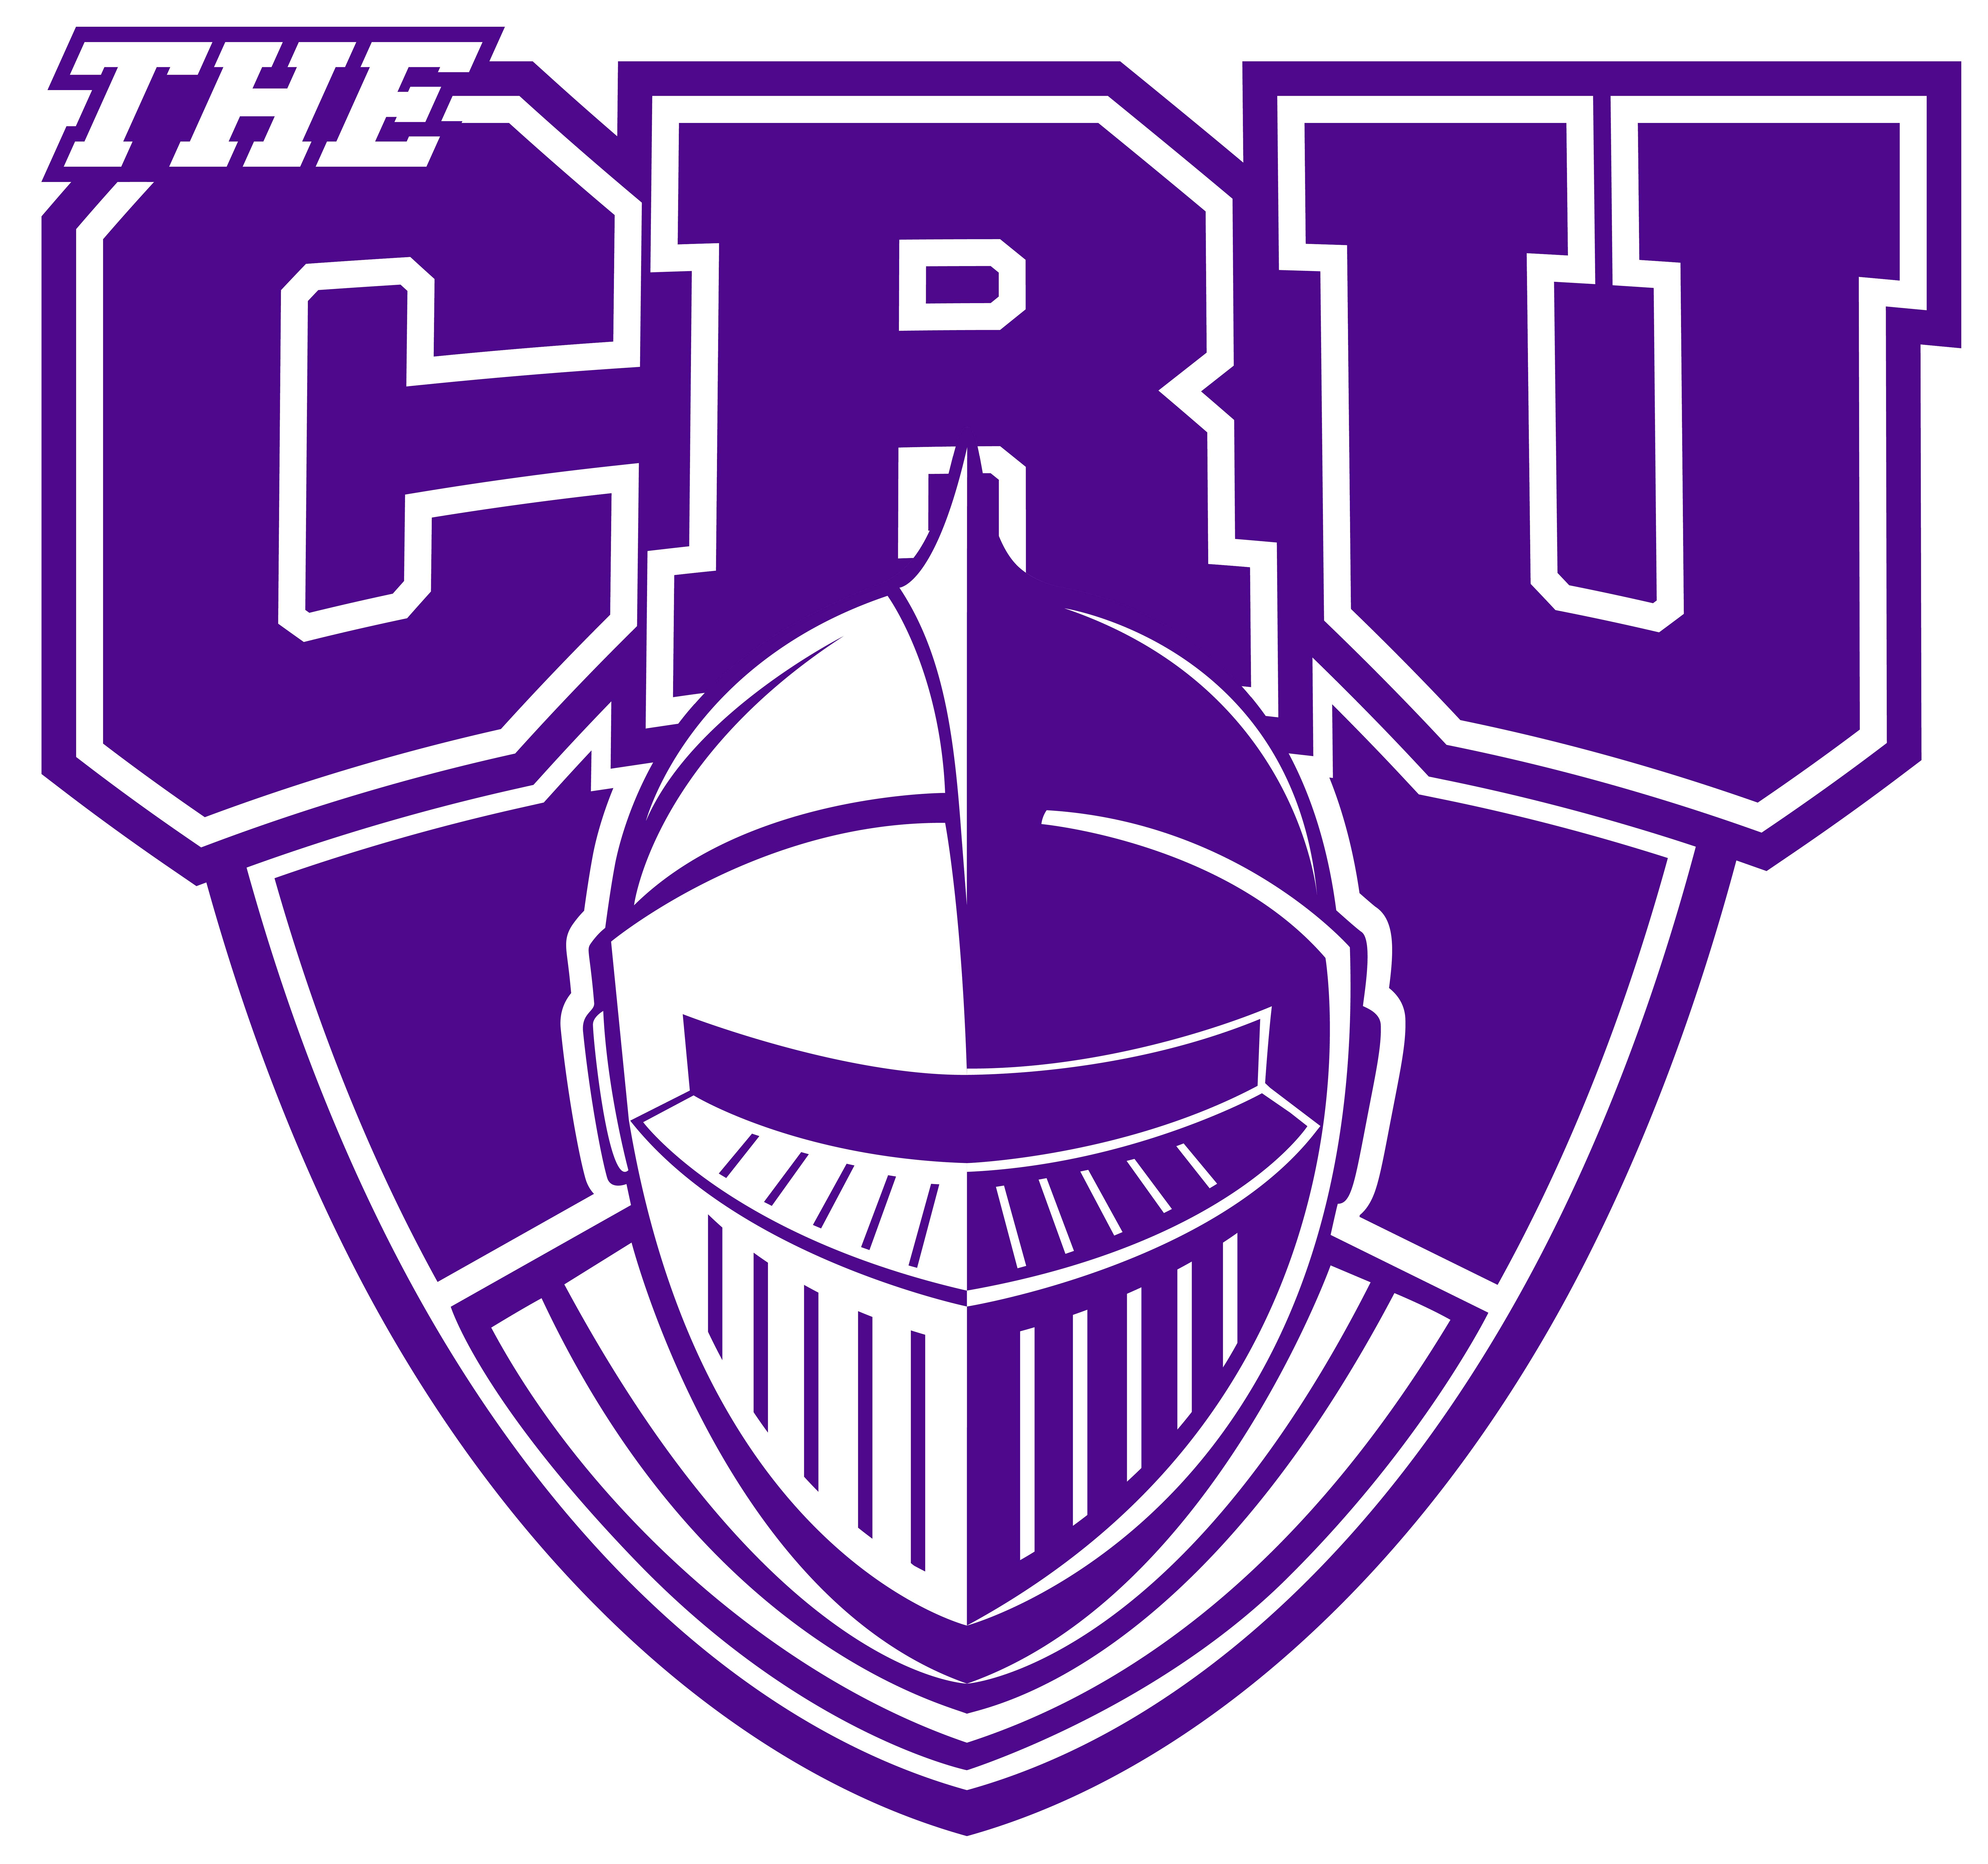 UMHB Armor CRU logo - color - purple